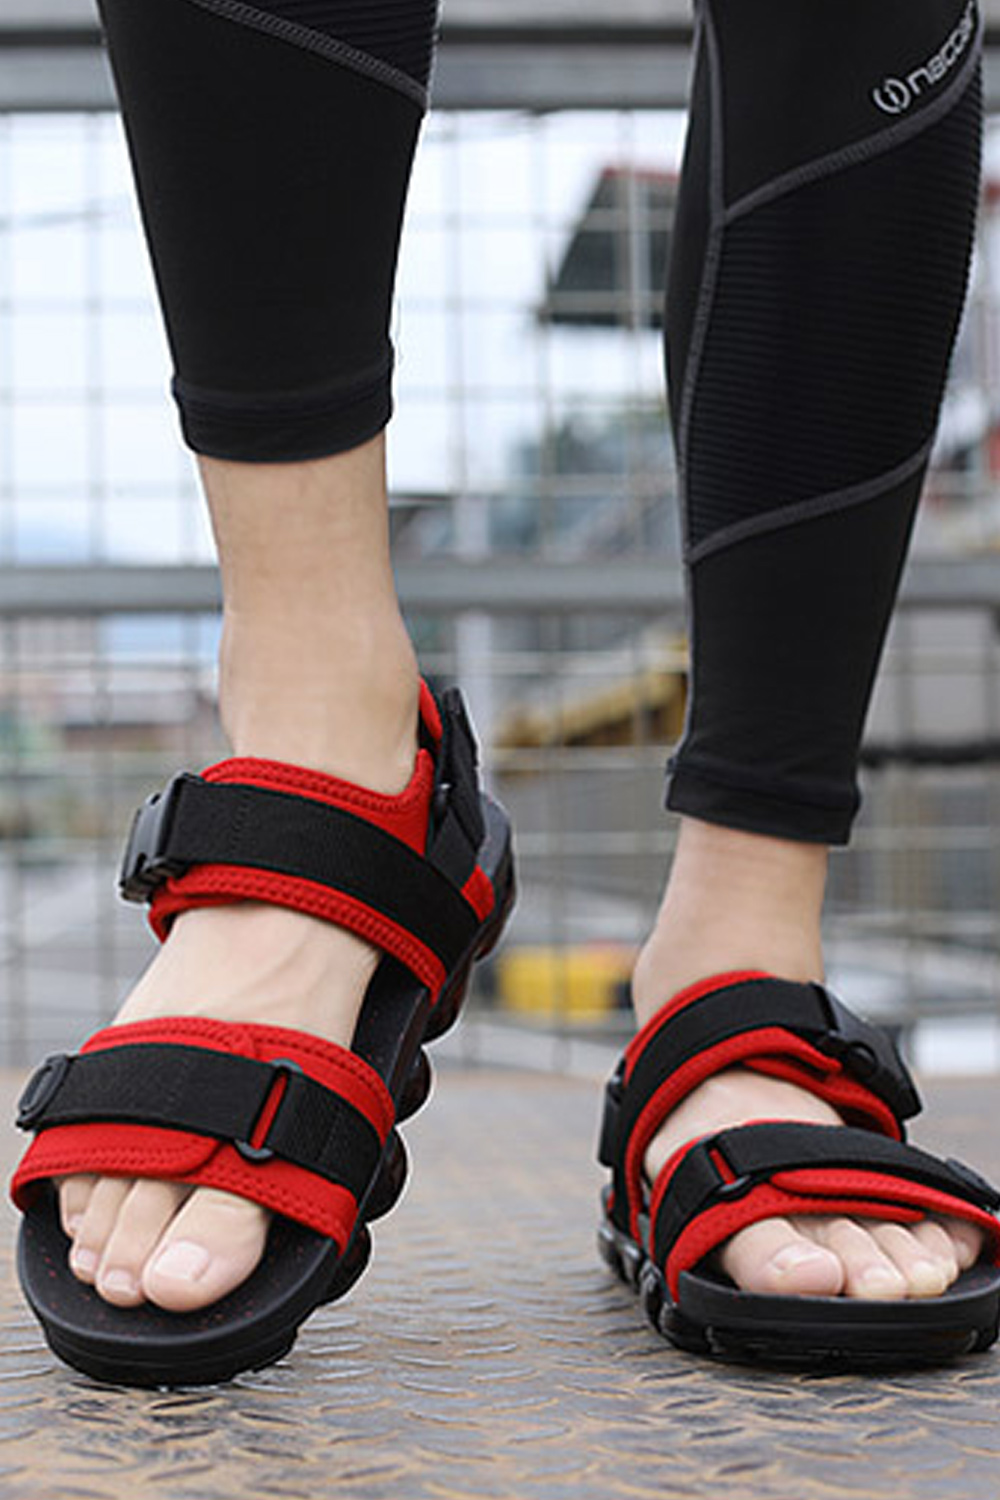 nike tanjun sandals black size 9